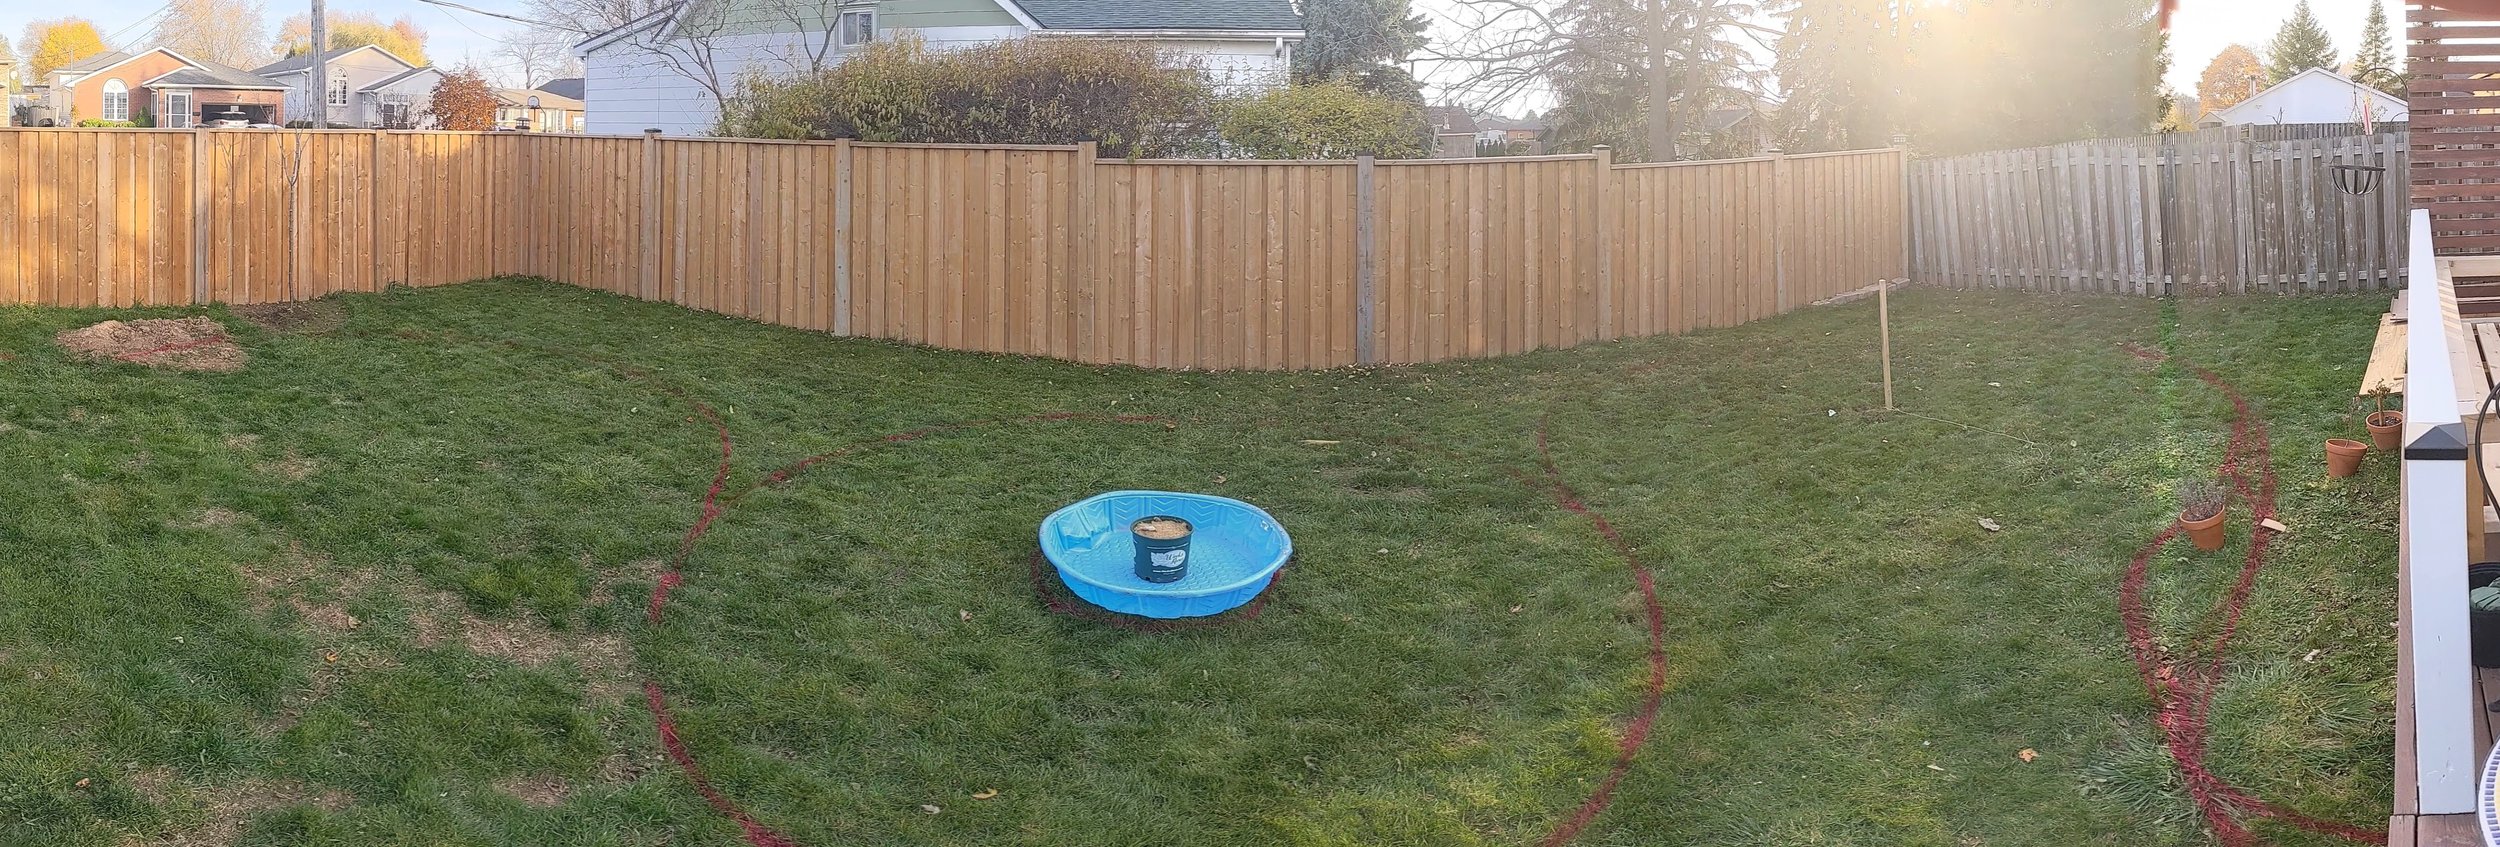 backyard-afterfence-before.jpg